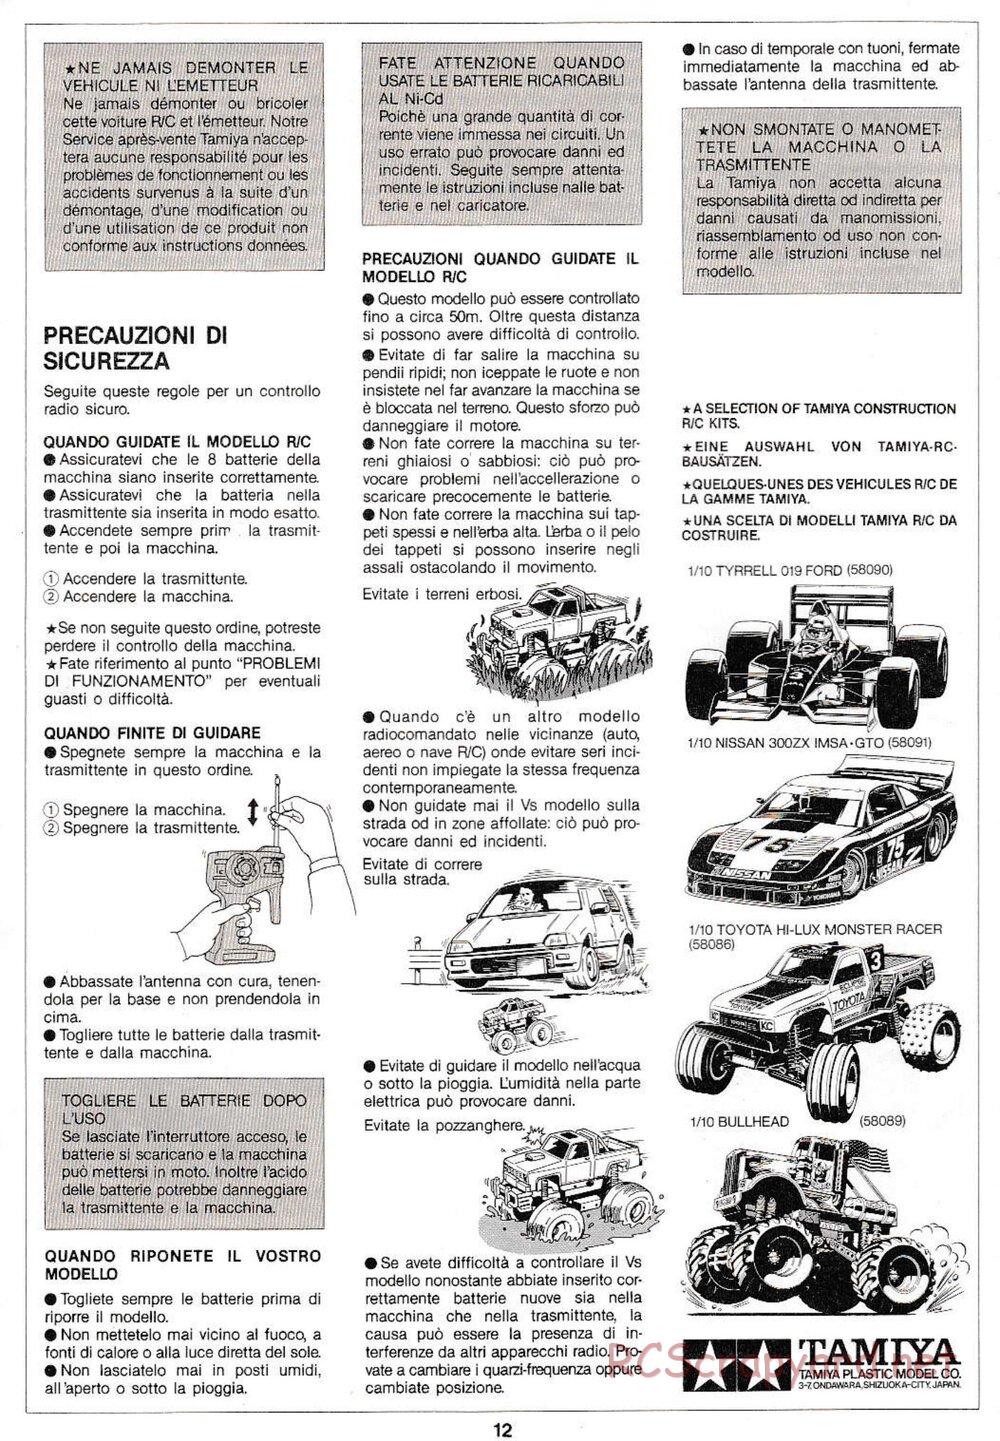 Tamiya - Clod Buster QD Chassis - Manual - Page 12